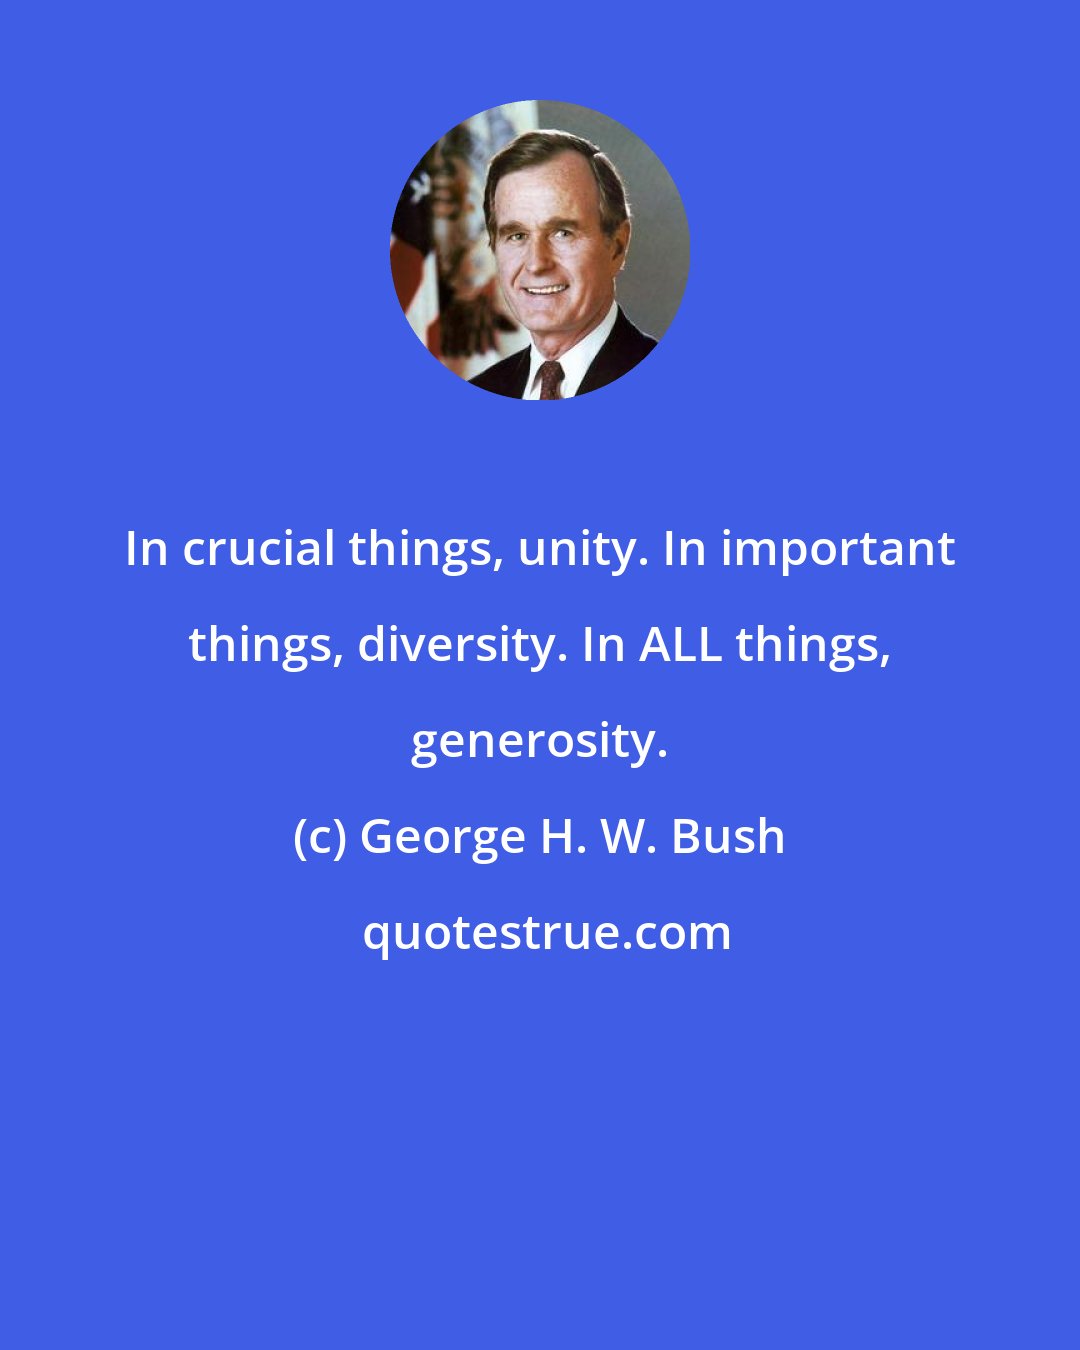 George H. W. Bush: In crucial things, unity. In important things, diversity. In ALL things, generosity.